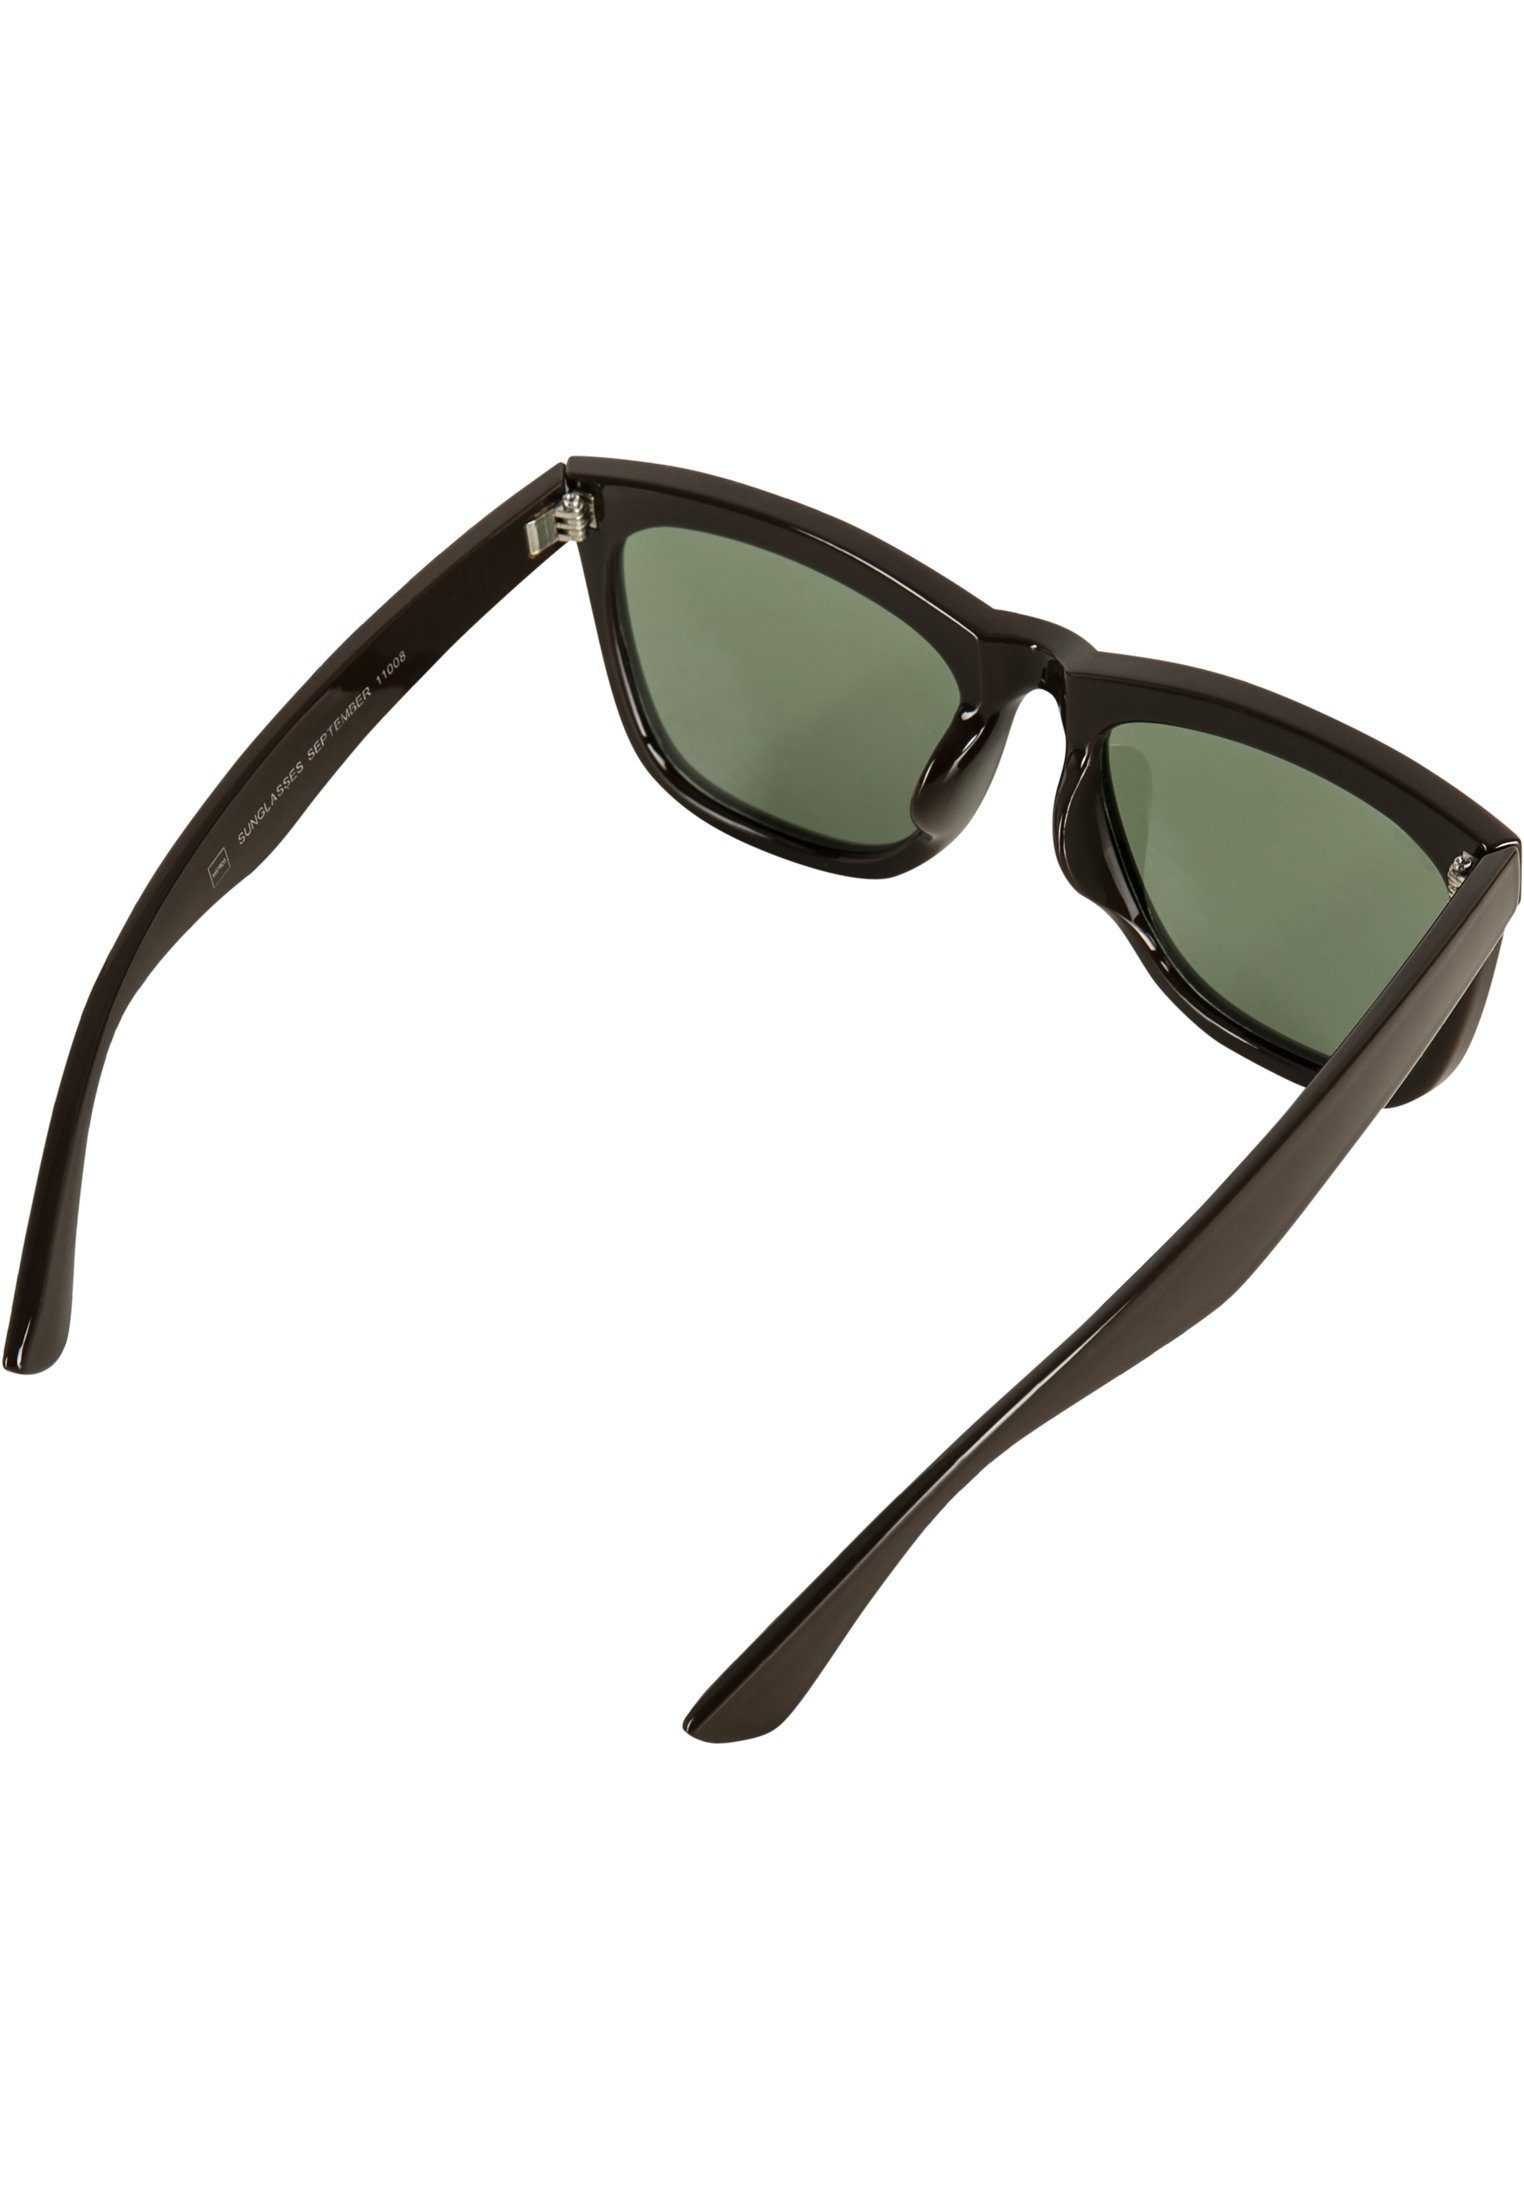 September brown/green Sunglasses MSTRDS Sonnenbrille Accessoires